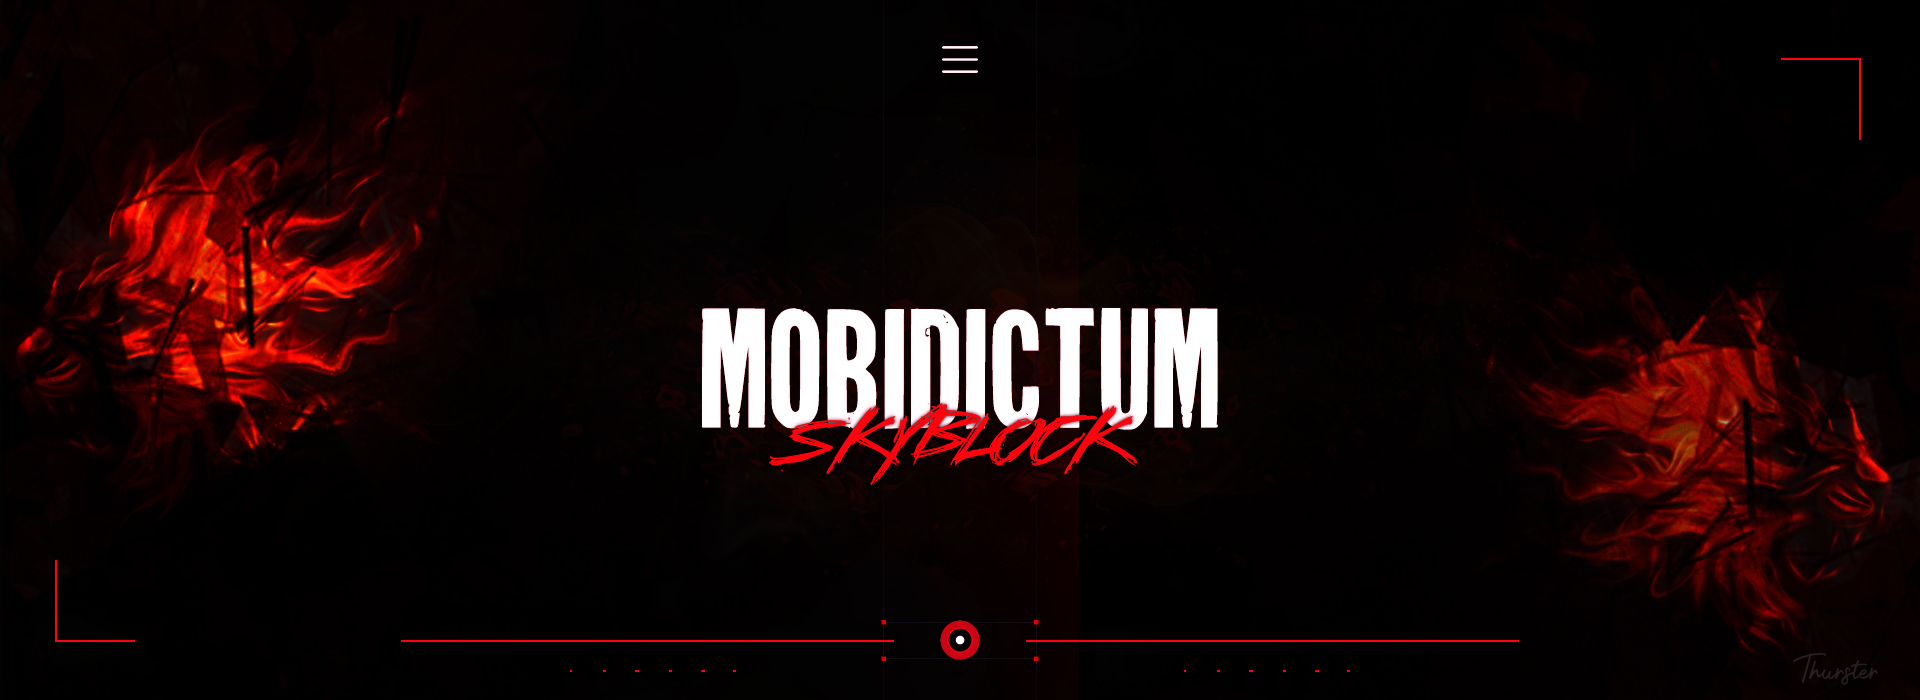 Mobidictum Minecraft Sunucusu.jpg